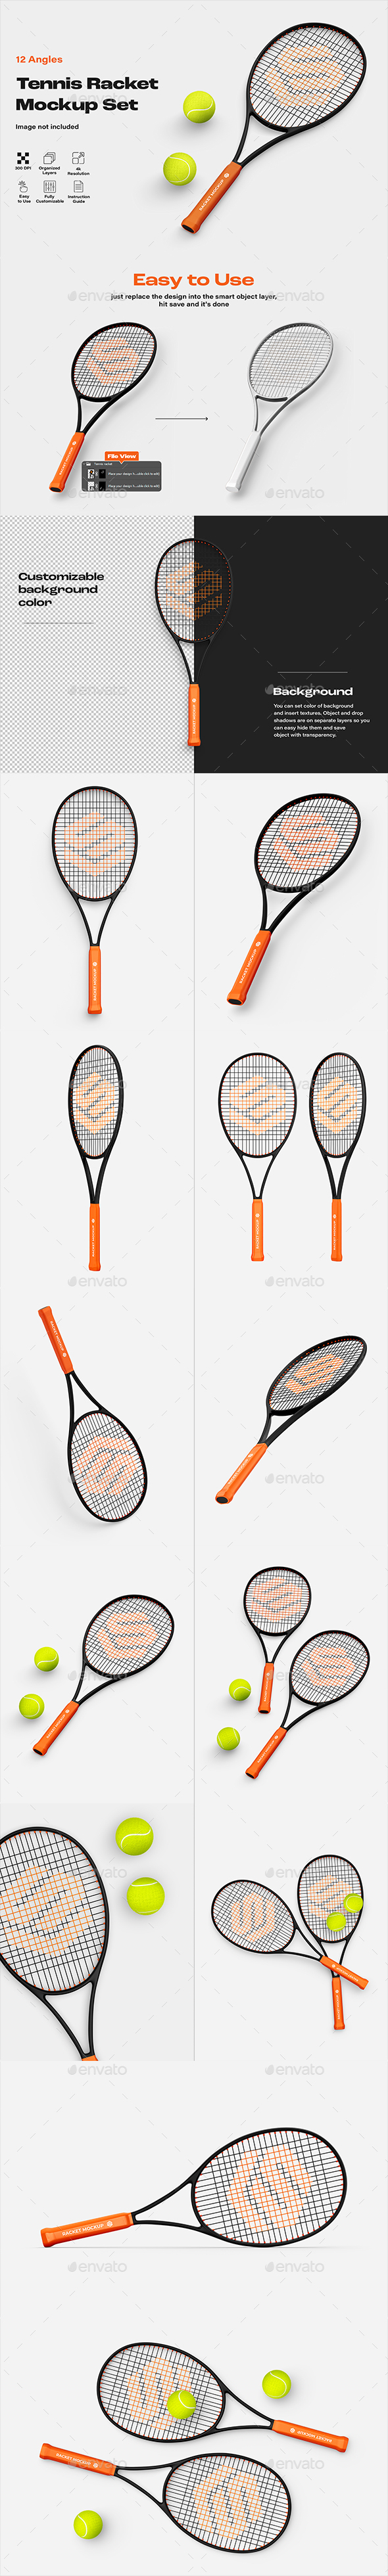 [DOWNLOAD]Tennis Racket Mockup Set